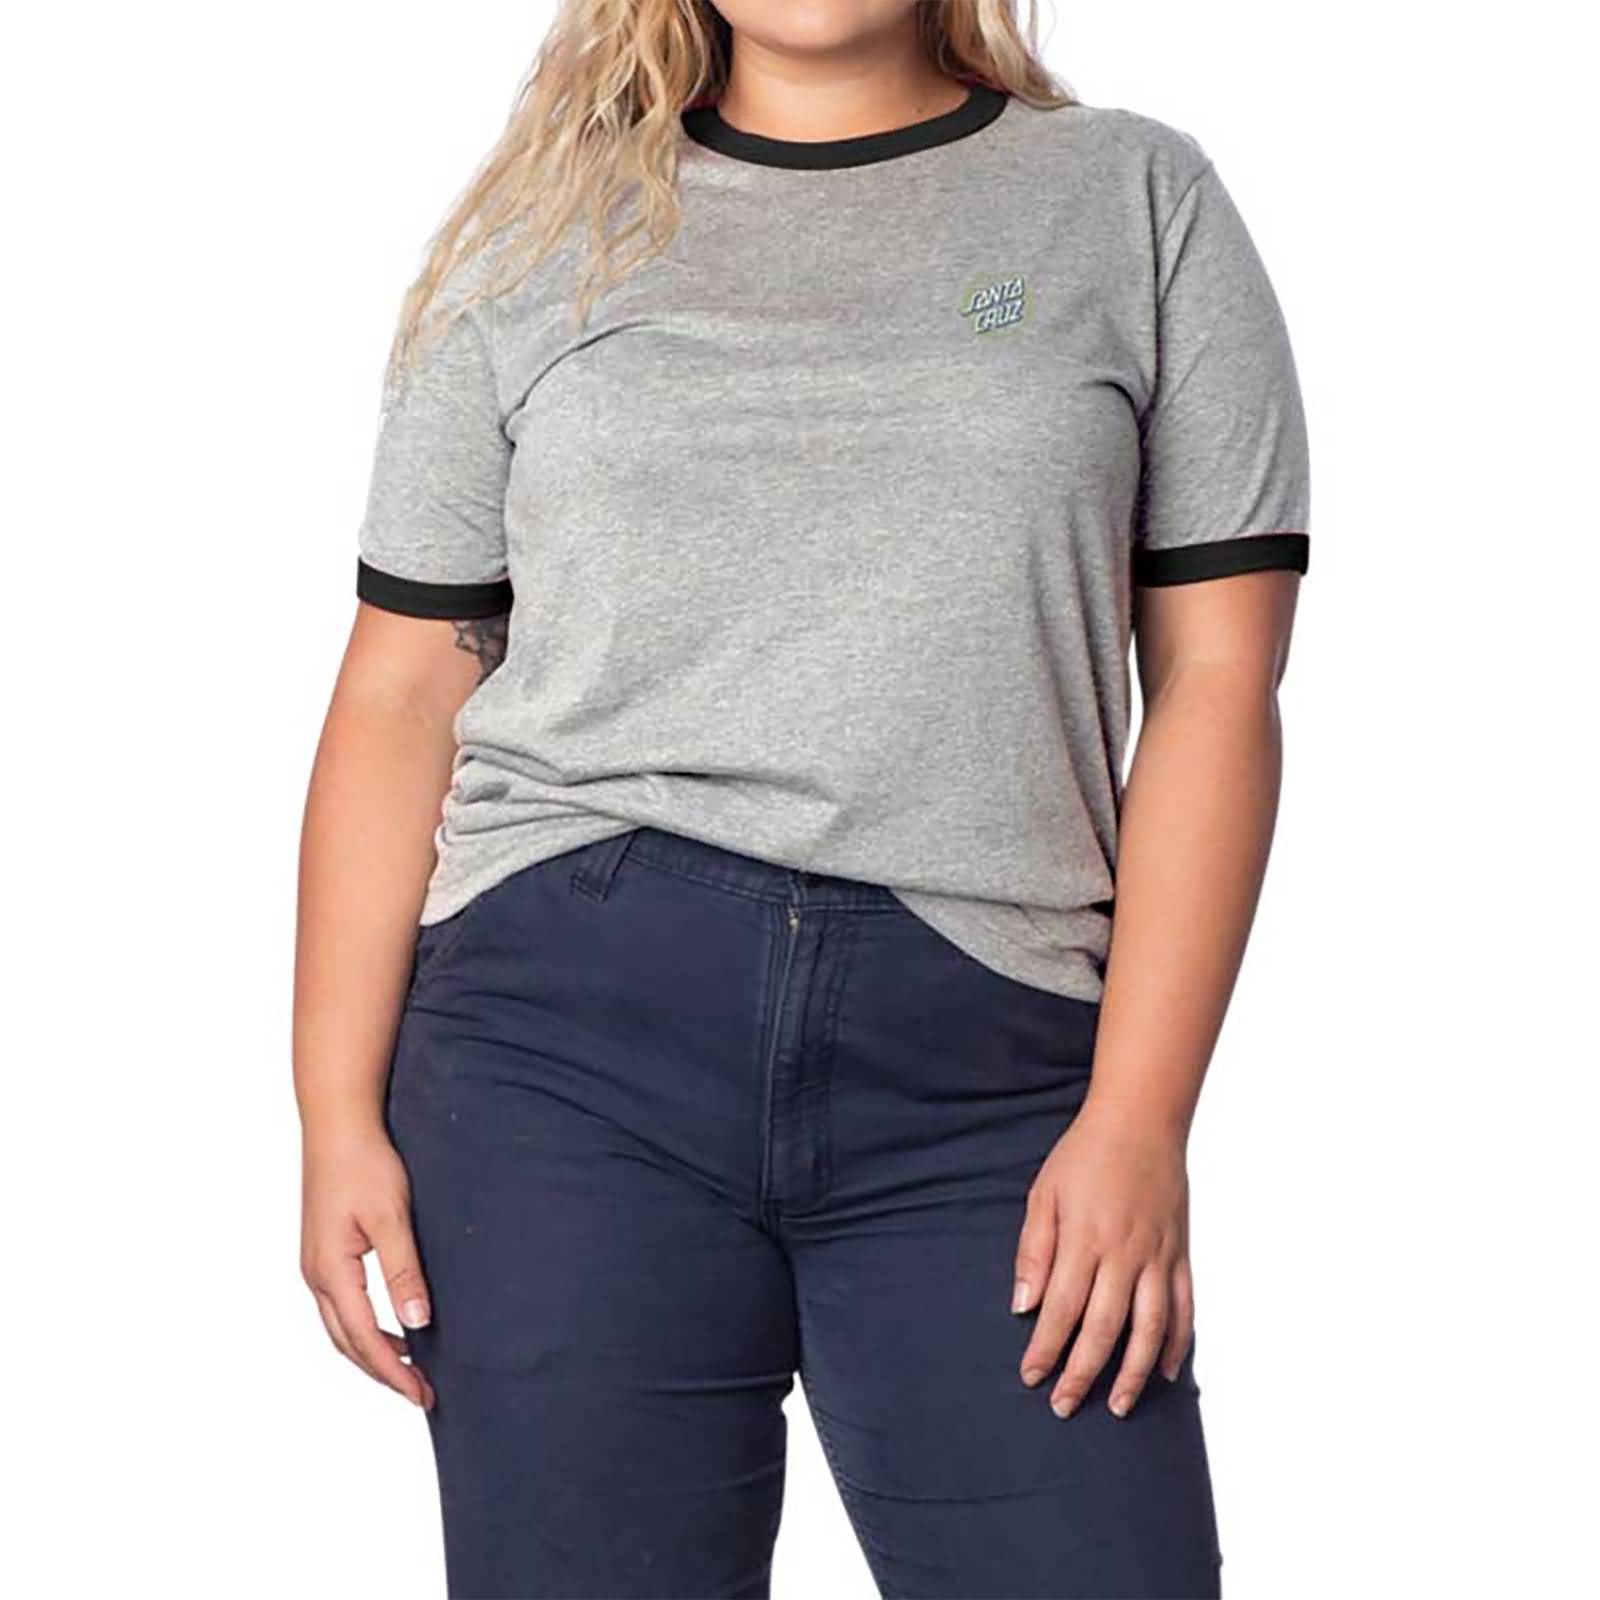 Santa Cruz Absent Gleam Dot Women's Short-Sleeve Shirts-44155480